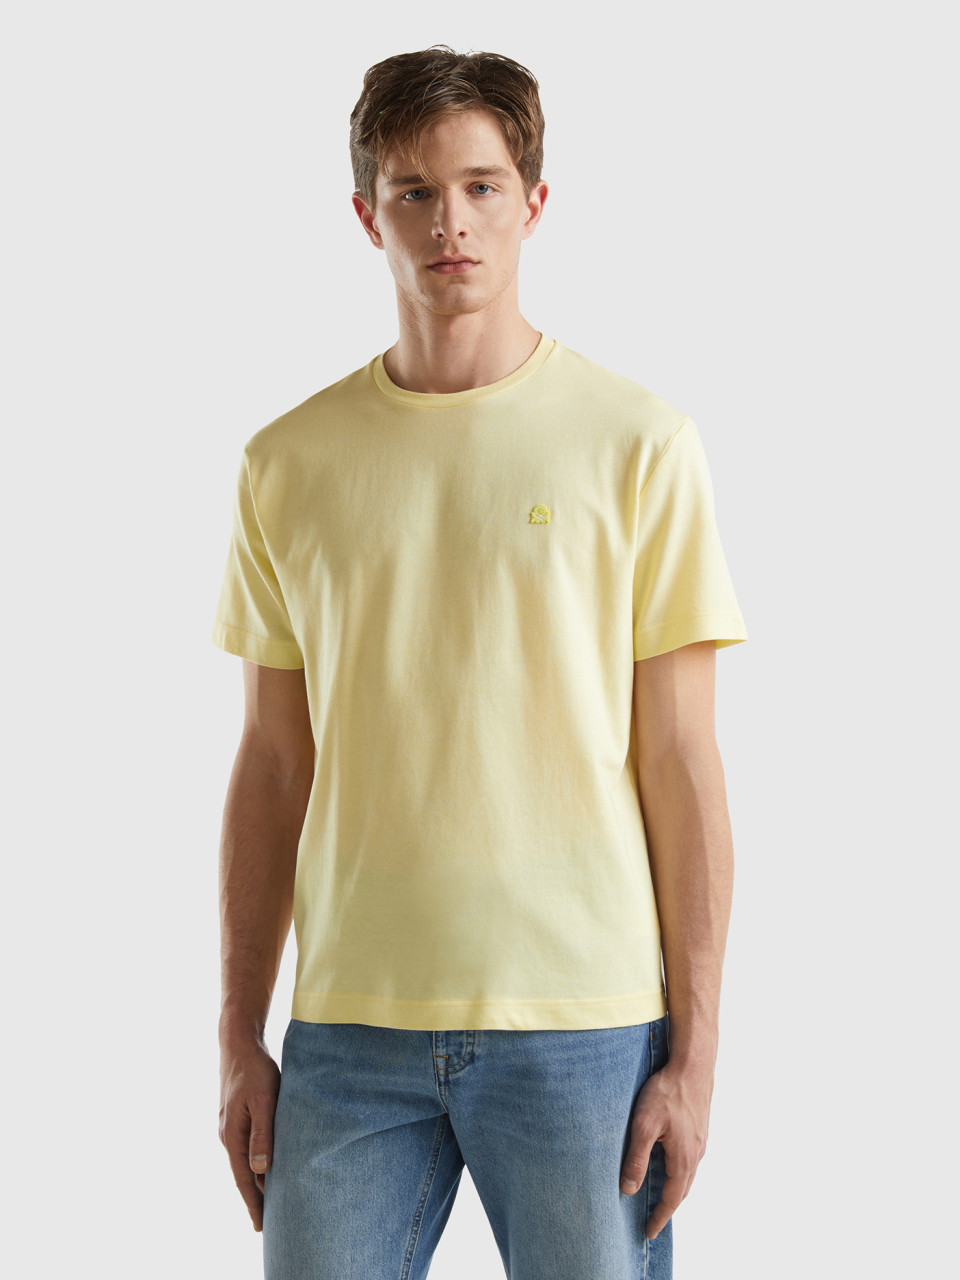 Benetton, T-shirt In Micro Pique, Yellow, Men